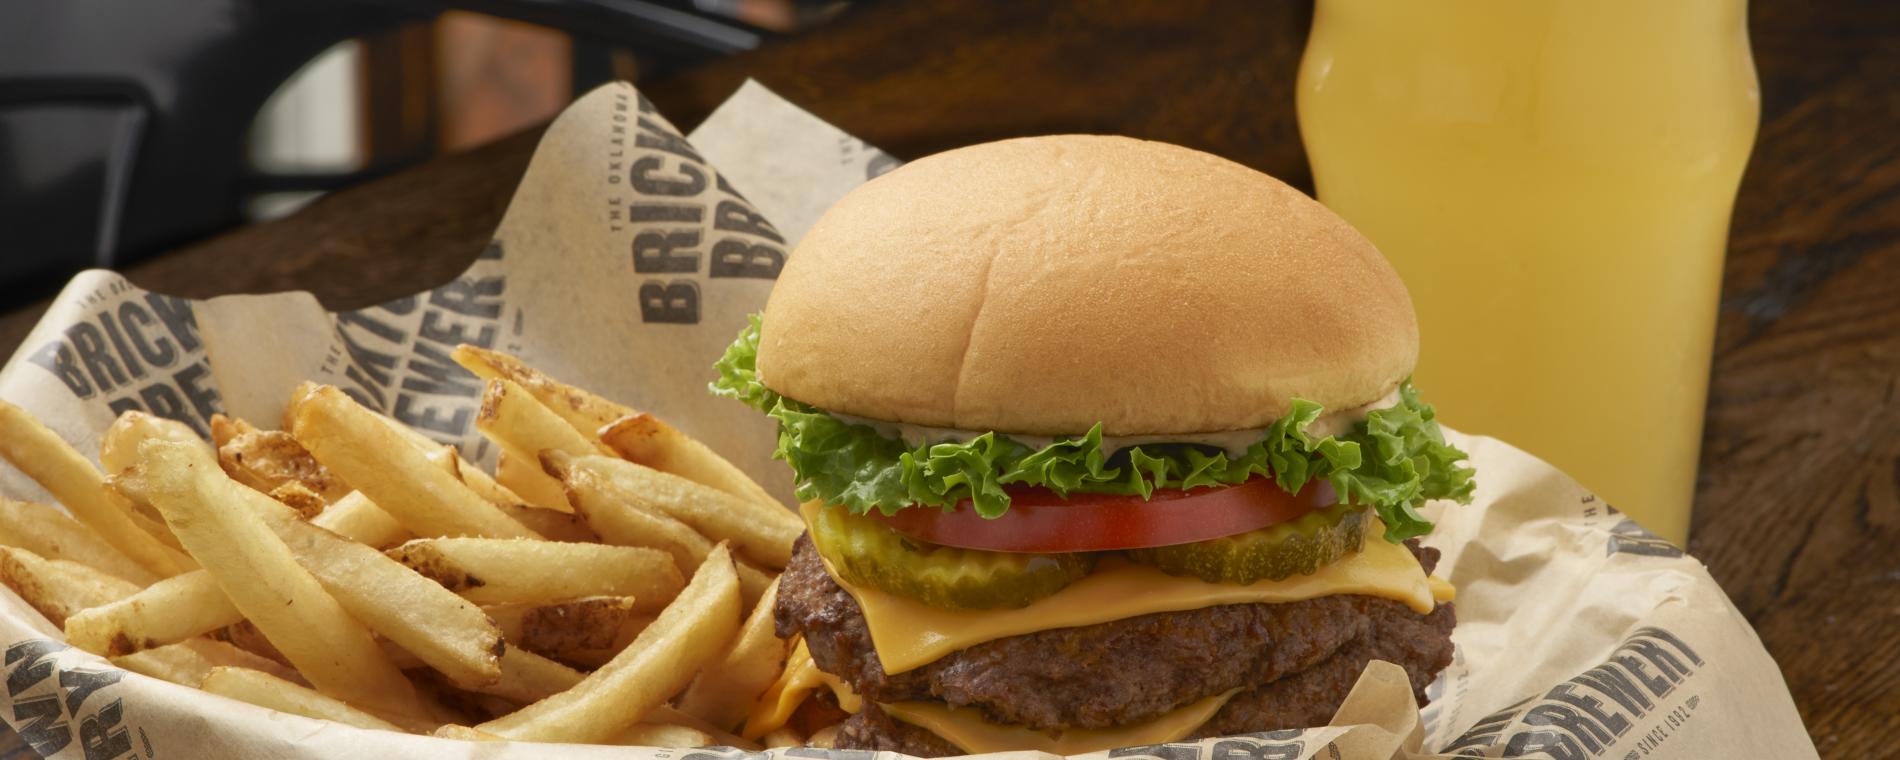 BTown double burger & beer Visit Wichita